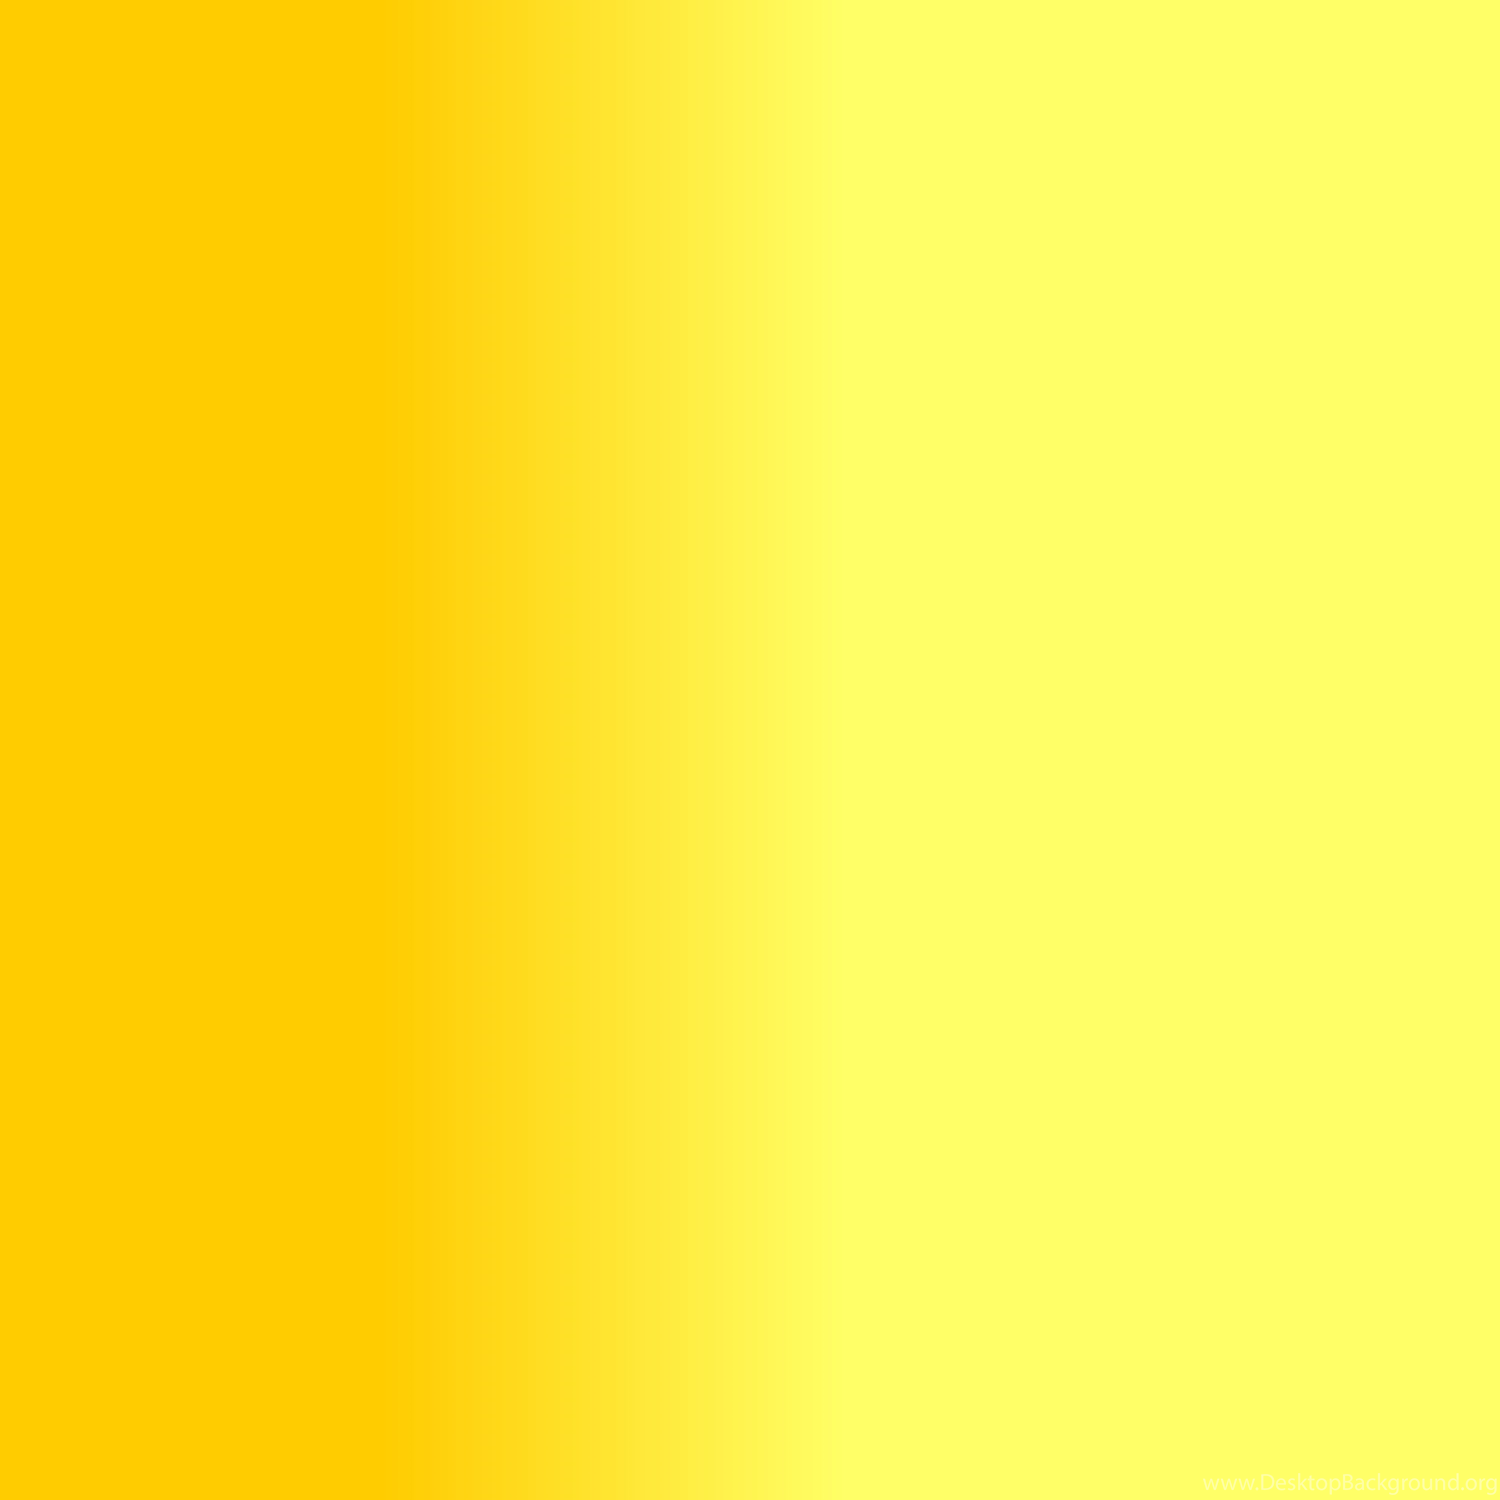 Желтый цвет. X`KNSQ CDYTN. Желтый фон. Желто золотой цвет. Темно желтая краска